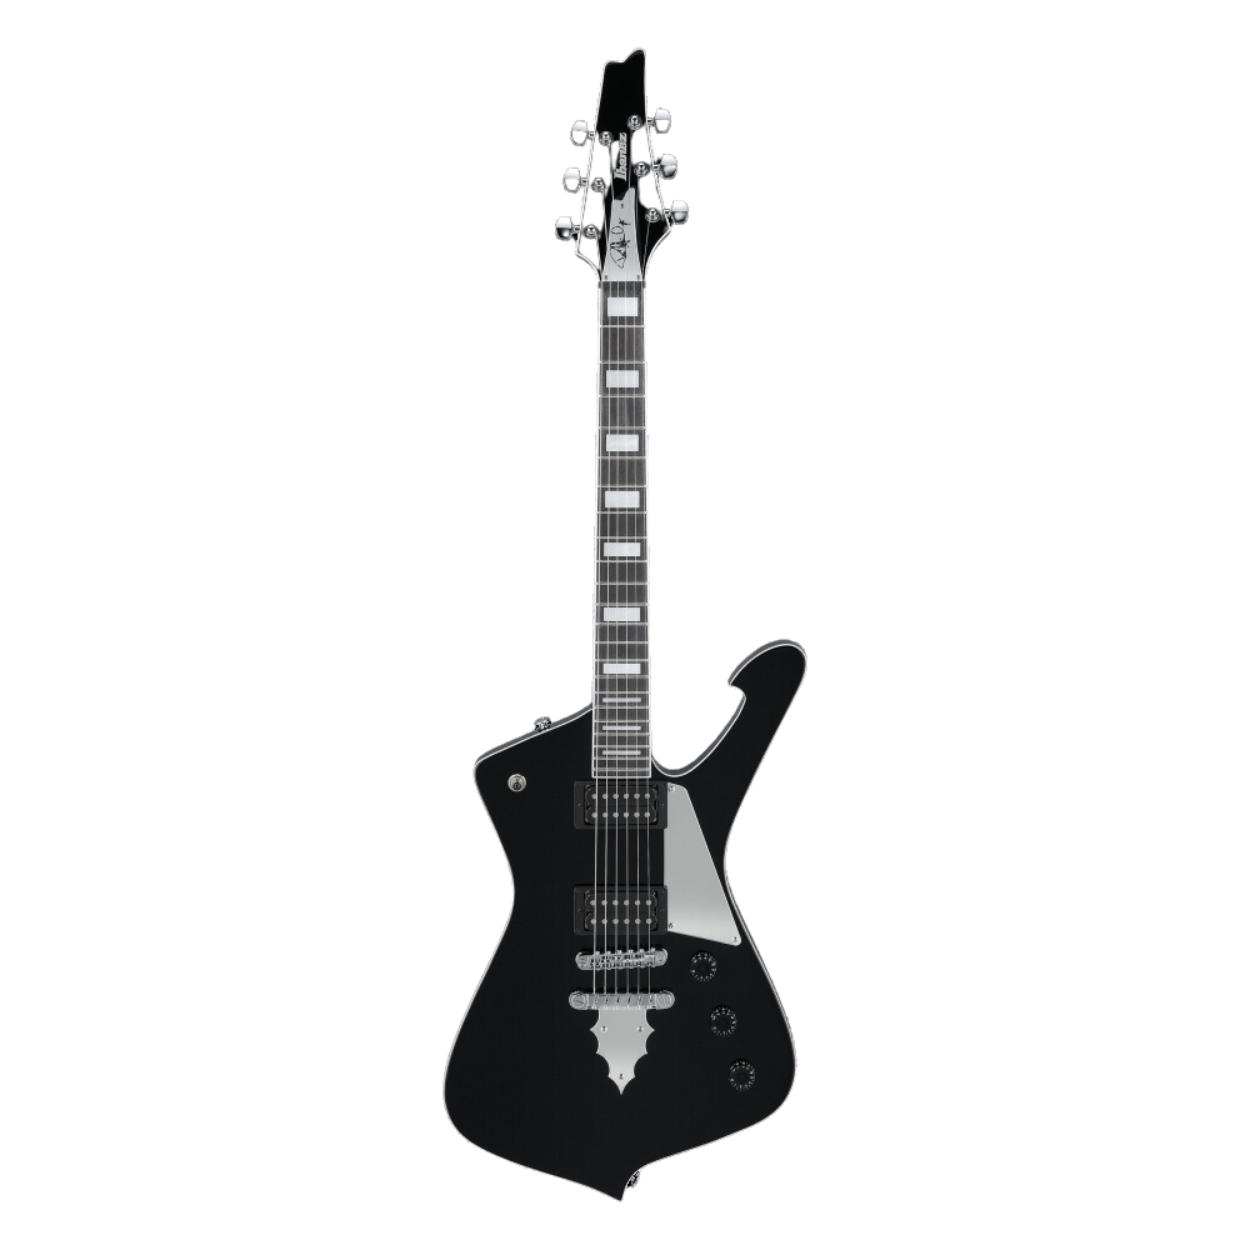 Ibanez Ps60-bk Paul Stanley Signature Electric Guitar